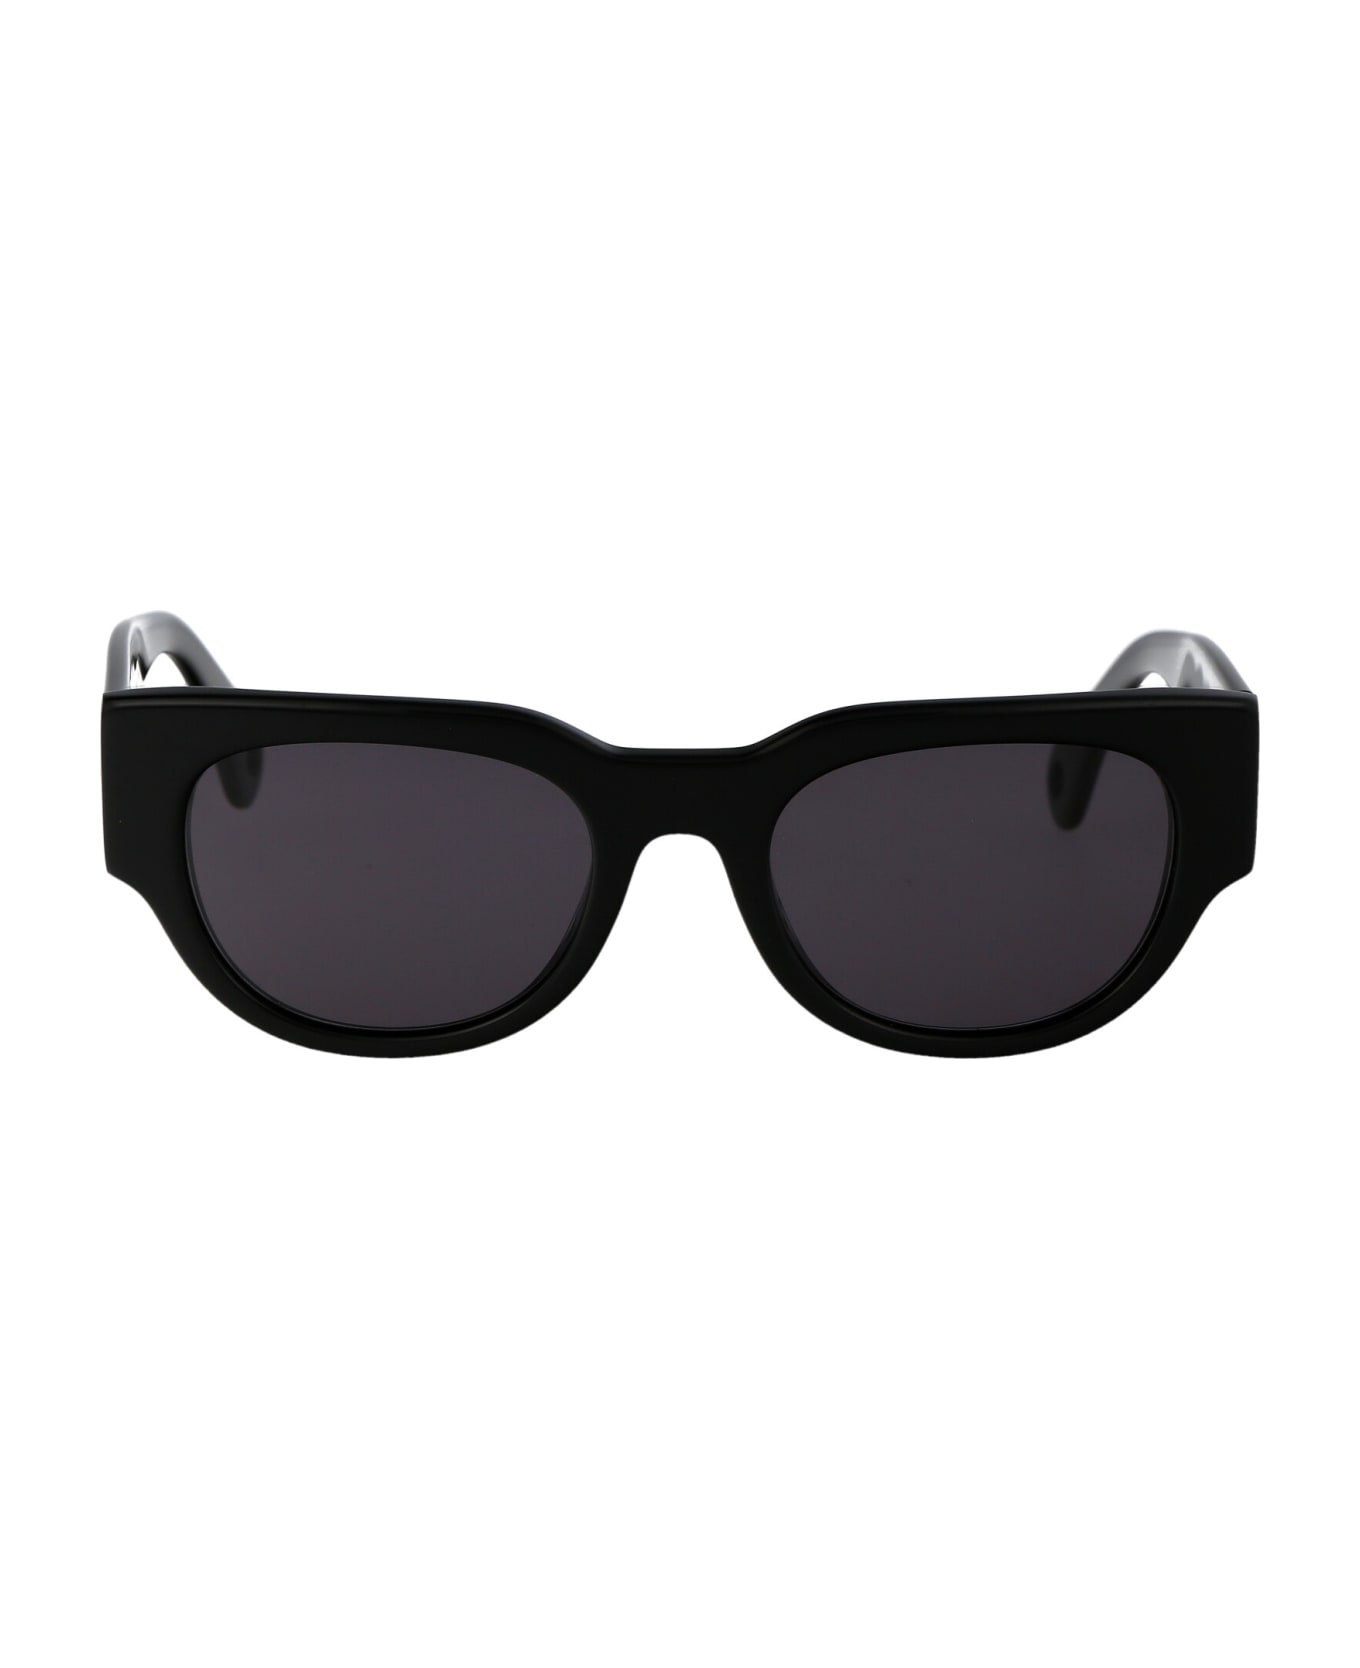 Lanvin Lnv670s Sunglasses - 001 BLACK サングラス